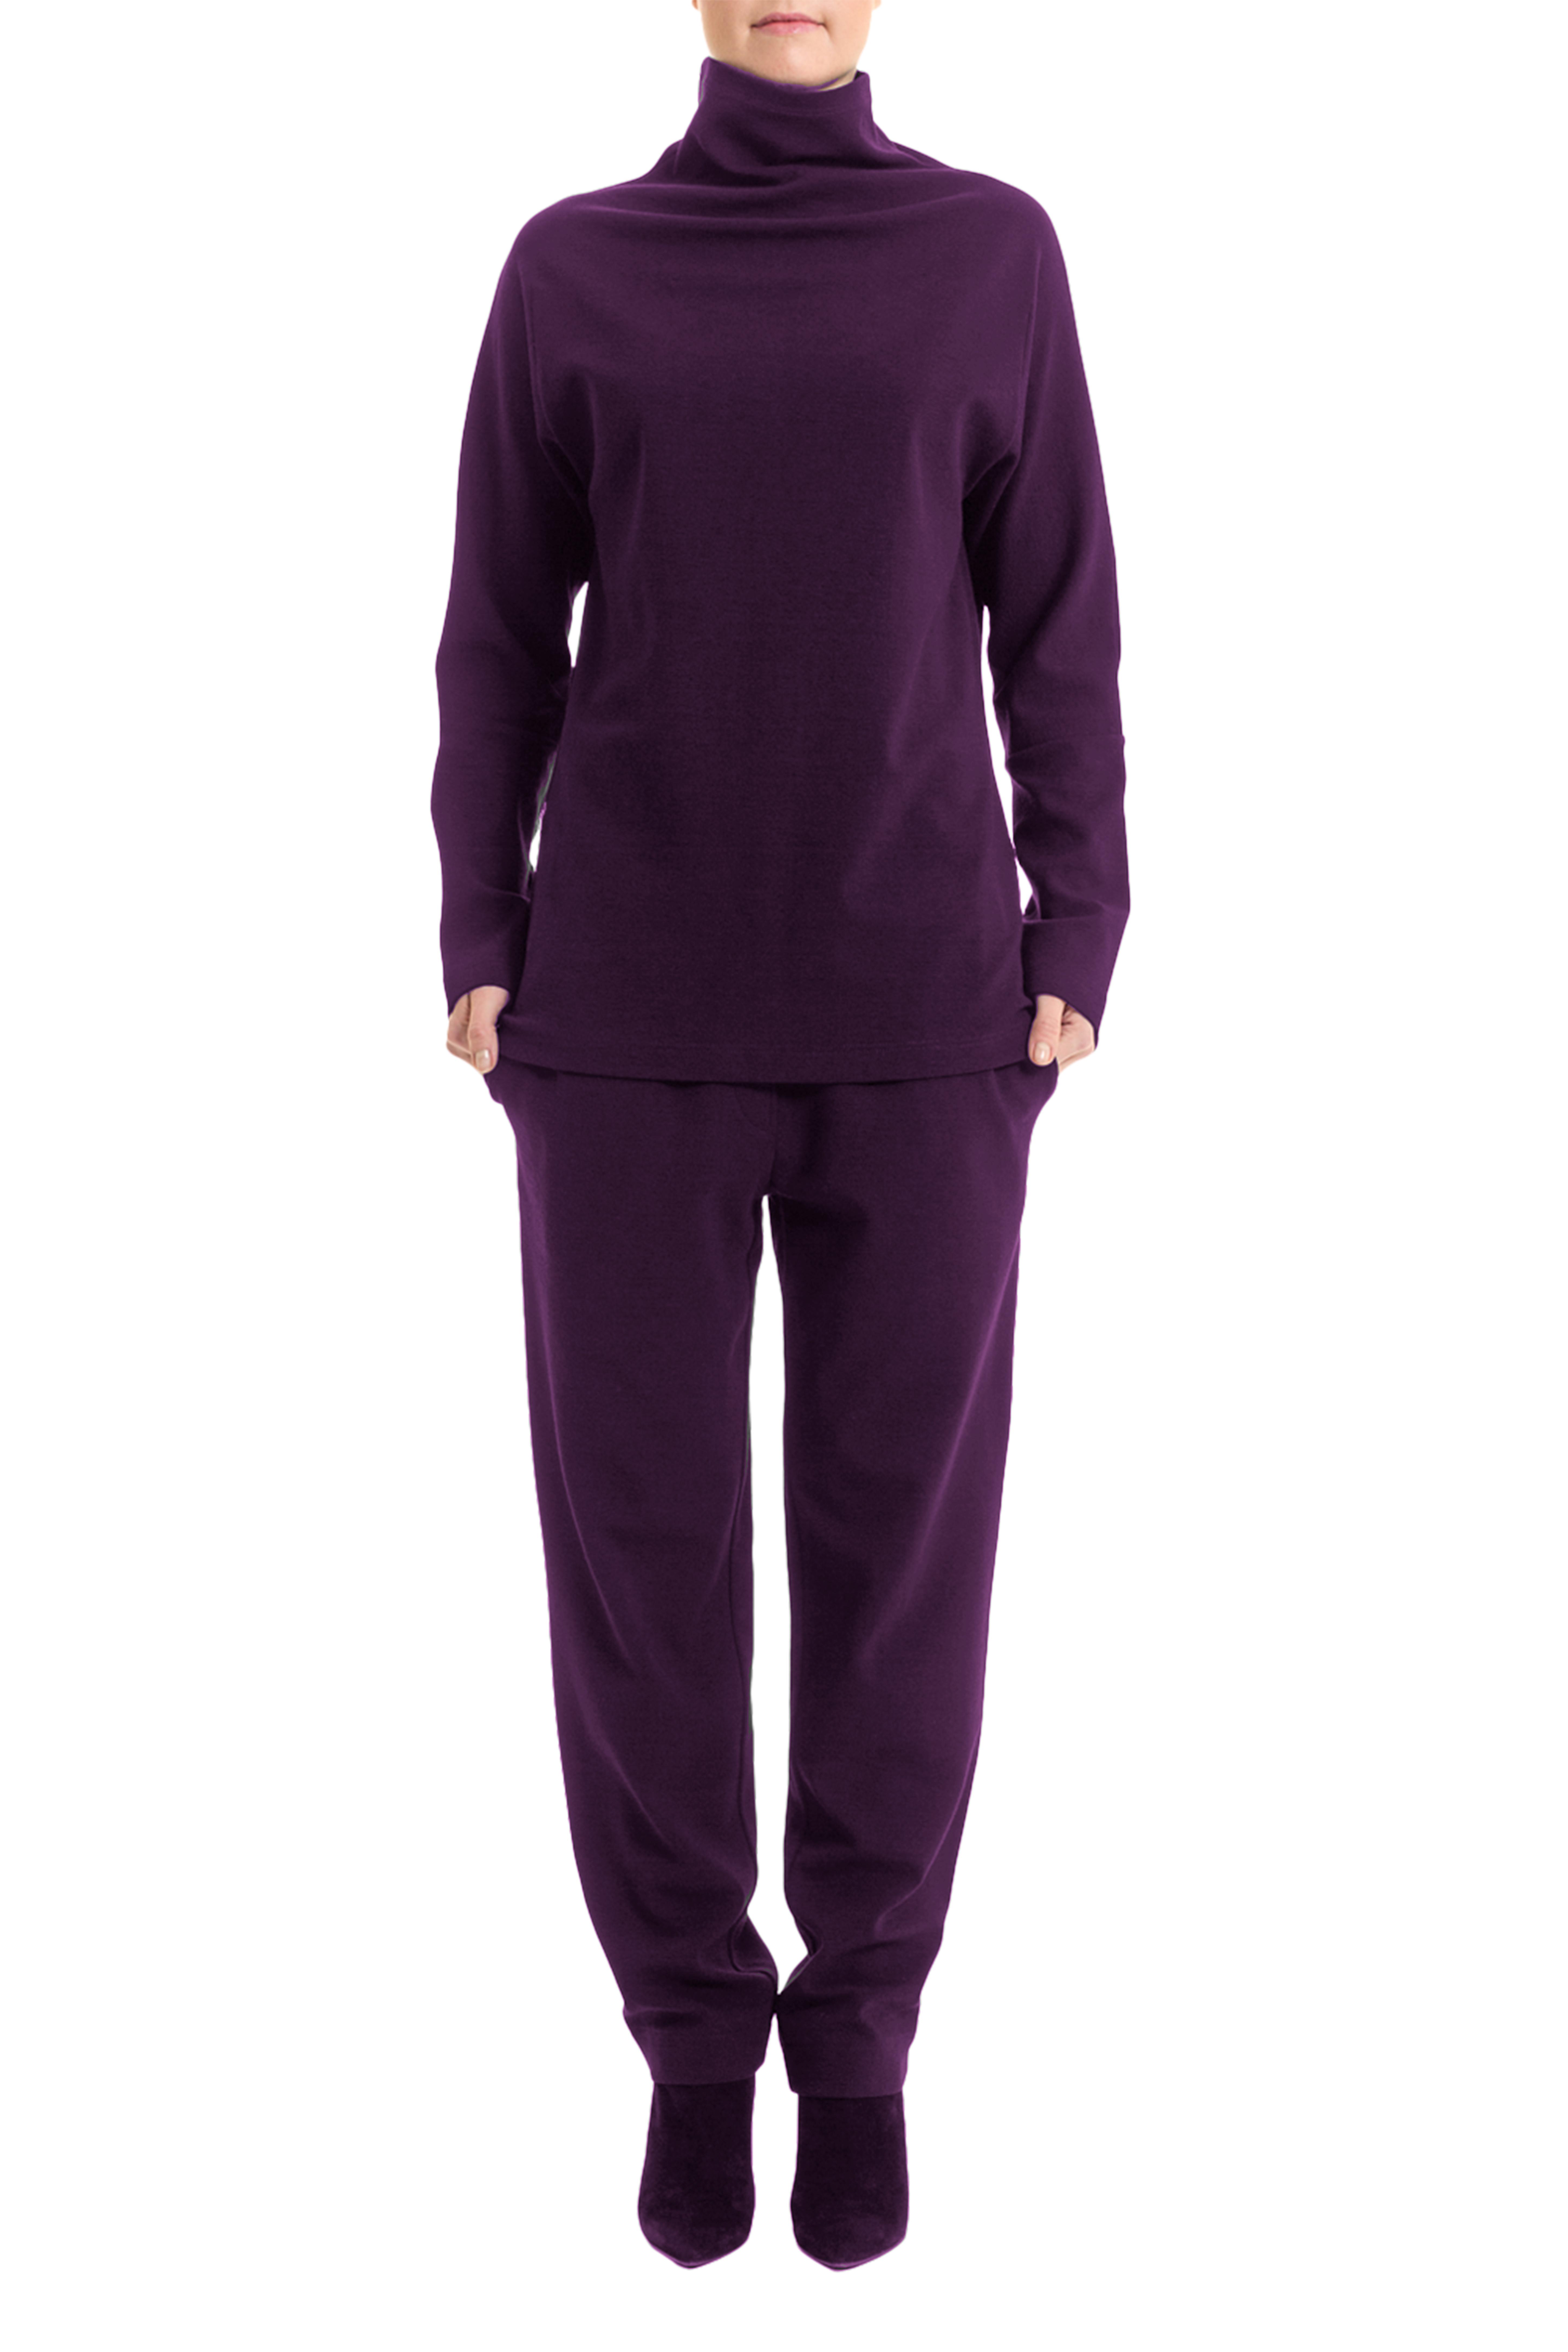 AR19 Flat knit-purple-AR by ANNA RUOHONEN